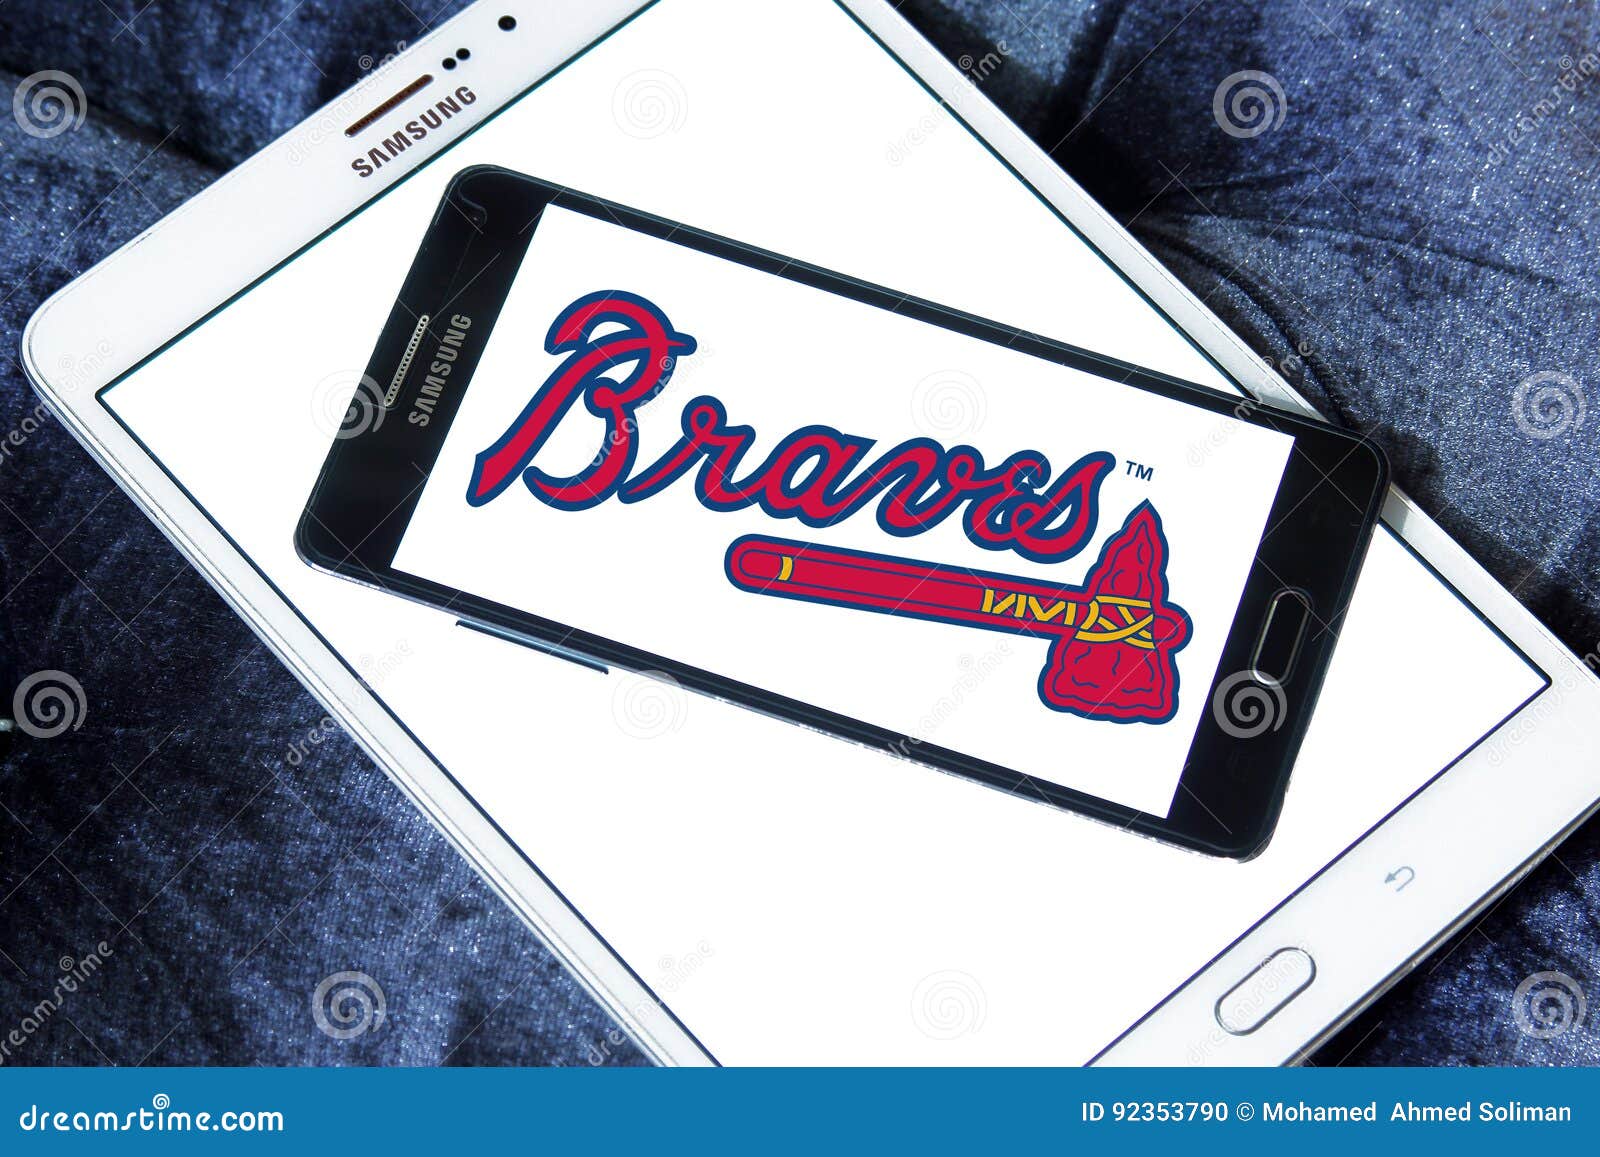 Atlanta Braves Baseball Team Logo Editorial Image - Image of icon